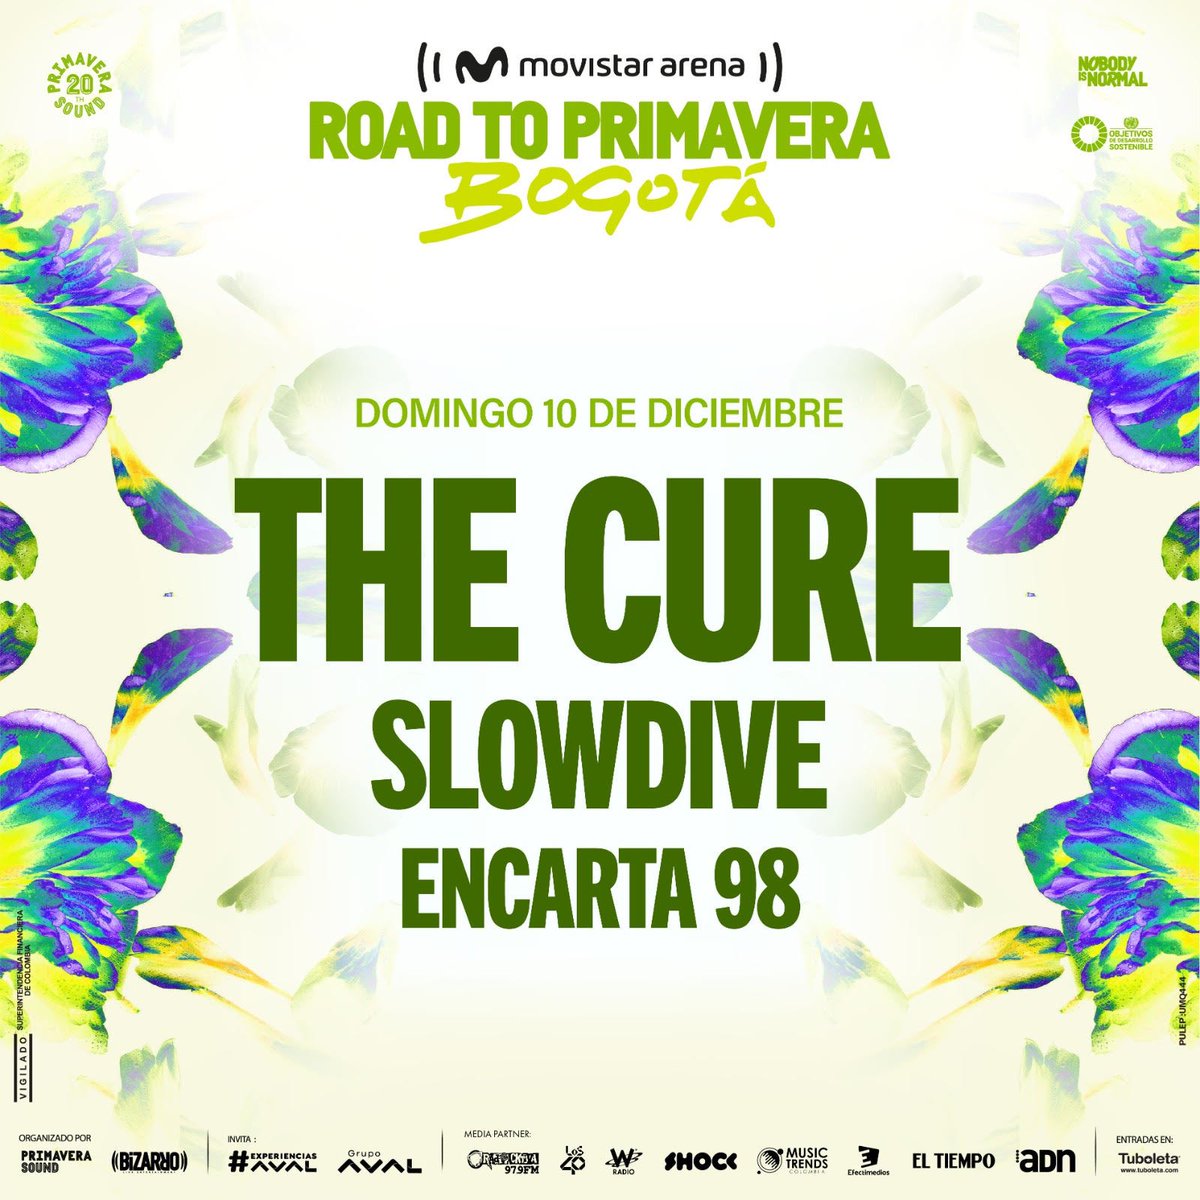 LISTOS HORARIOS PARA ROAD TO PRIMAVERA!🚨

BOGOTA! FINAL NIGHT OF #SHOWSOFALOSTWORLD23 TOUR!!!
5:00PM - DOORS OPEN
6:00PM - @98encarta  
7:00PM - @slowdiveband 
8:15PM - @thecure 

@PS_Bogota